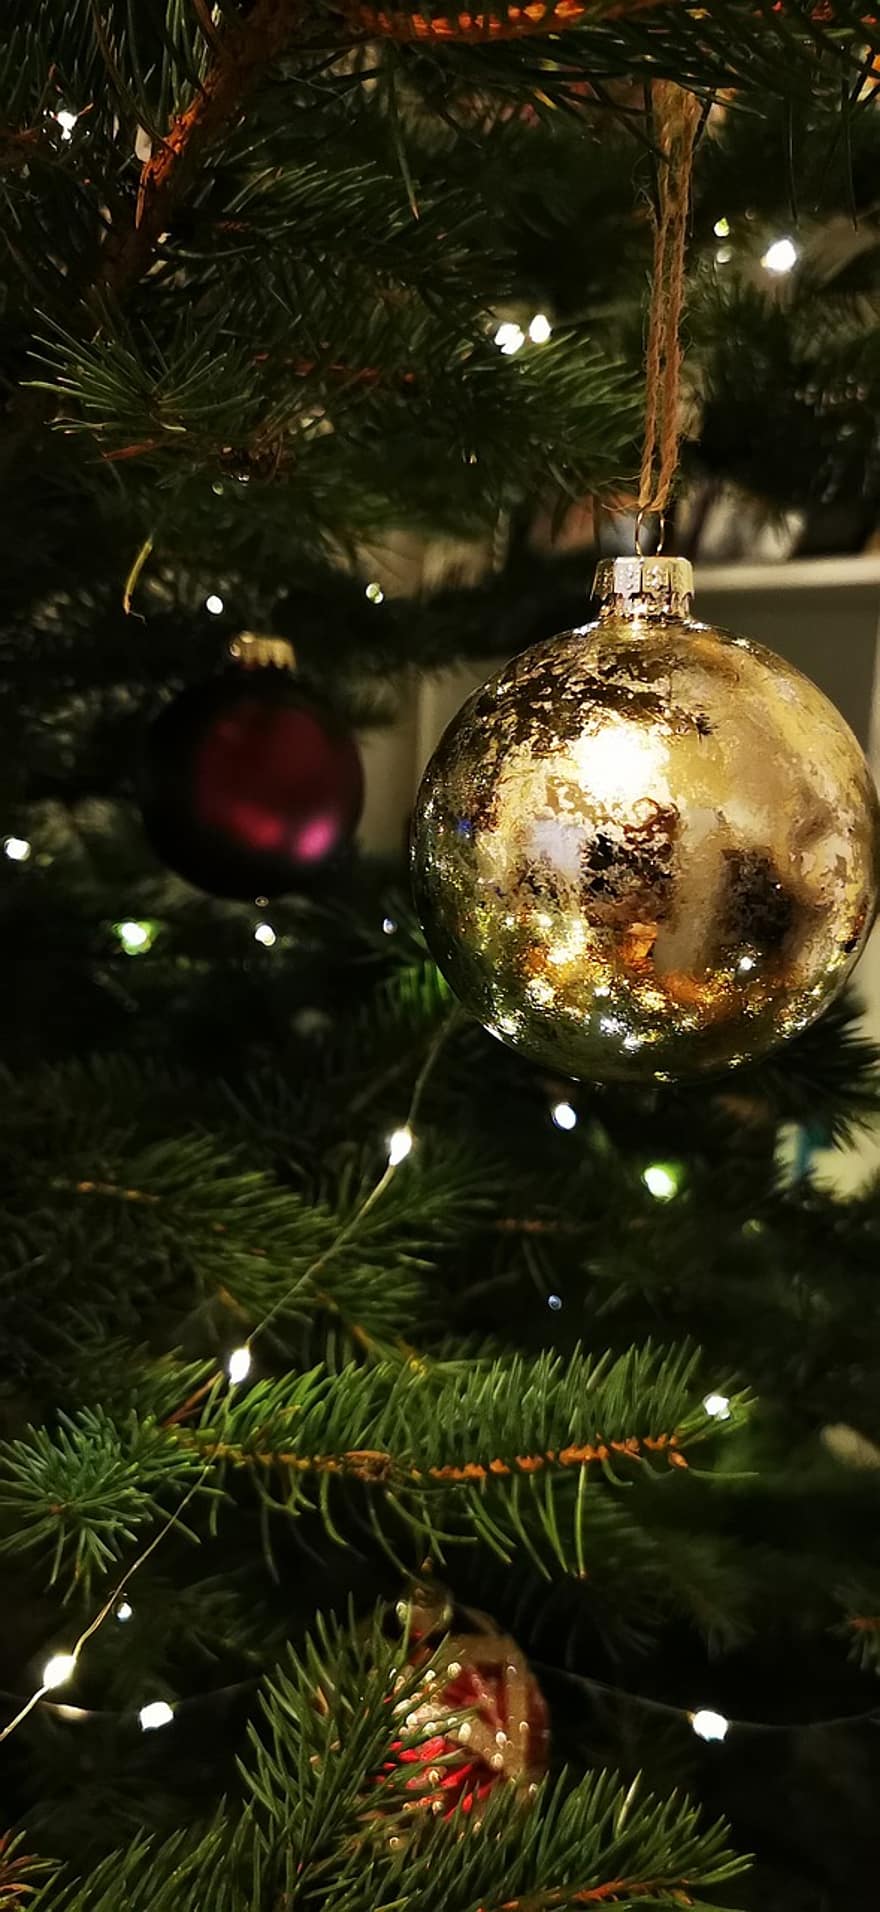 hiasan Natal, pohon Natal, hari Natal, pohon cemara, bola Natal, lampu Natal, lampu peri, perhiasan natal, dekorasi Natal, dekorasi natal, ornamen